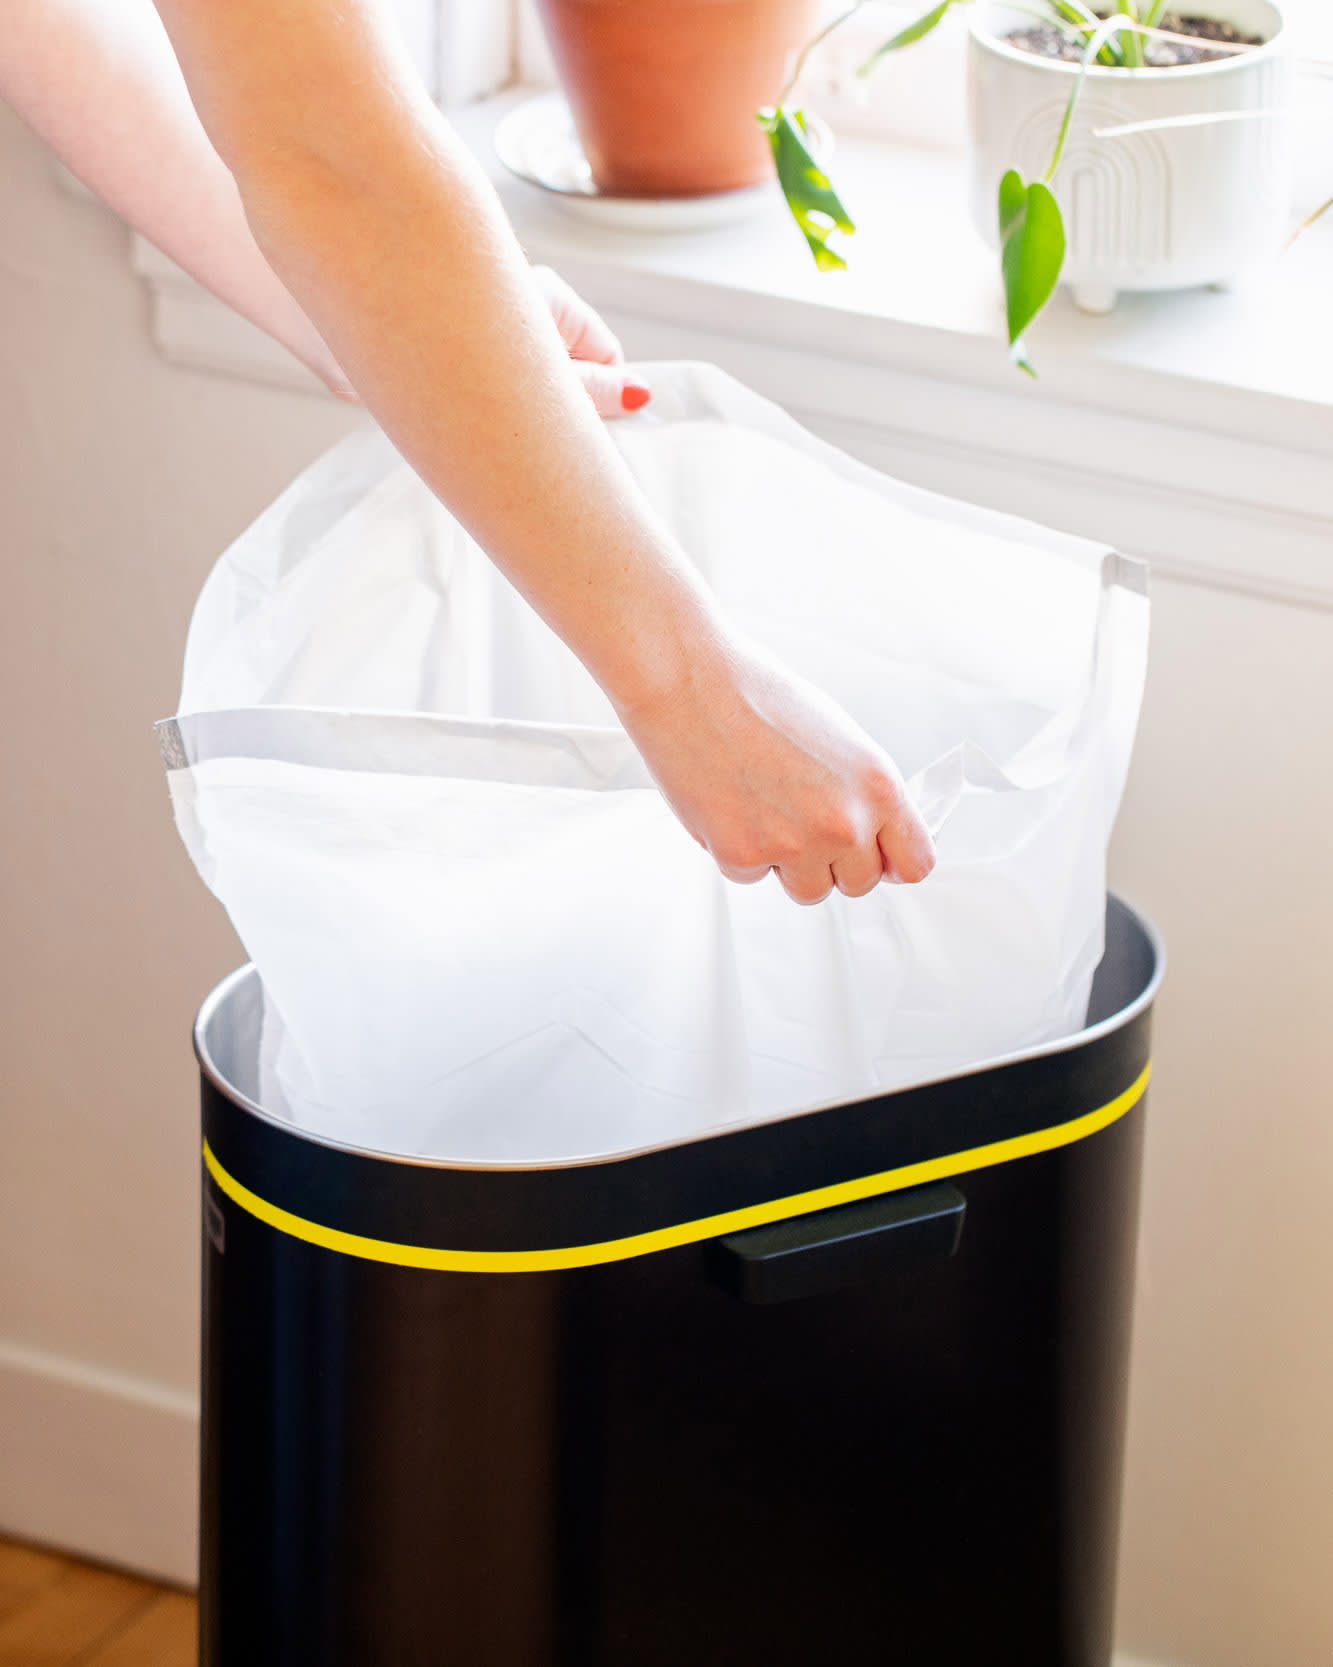 https://cdn.apartmenttherapy.info/image/upload/v1684961298/at/art/photo/2021-03/TikTok-Trash-Bag/tiktok-trash-bag-crop.jpg